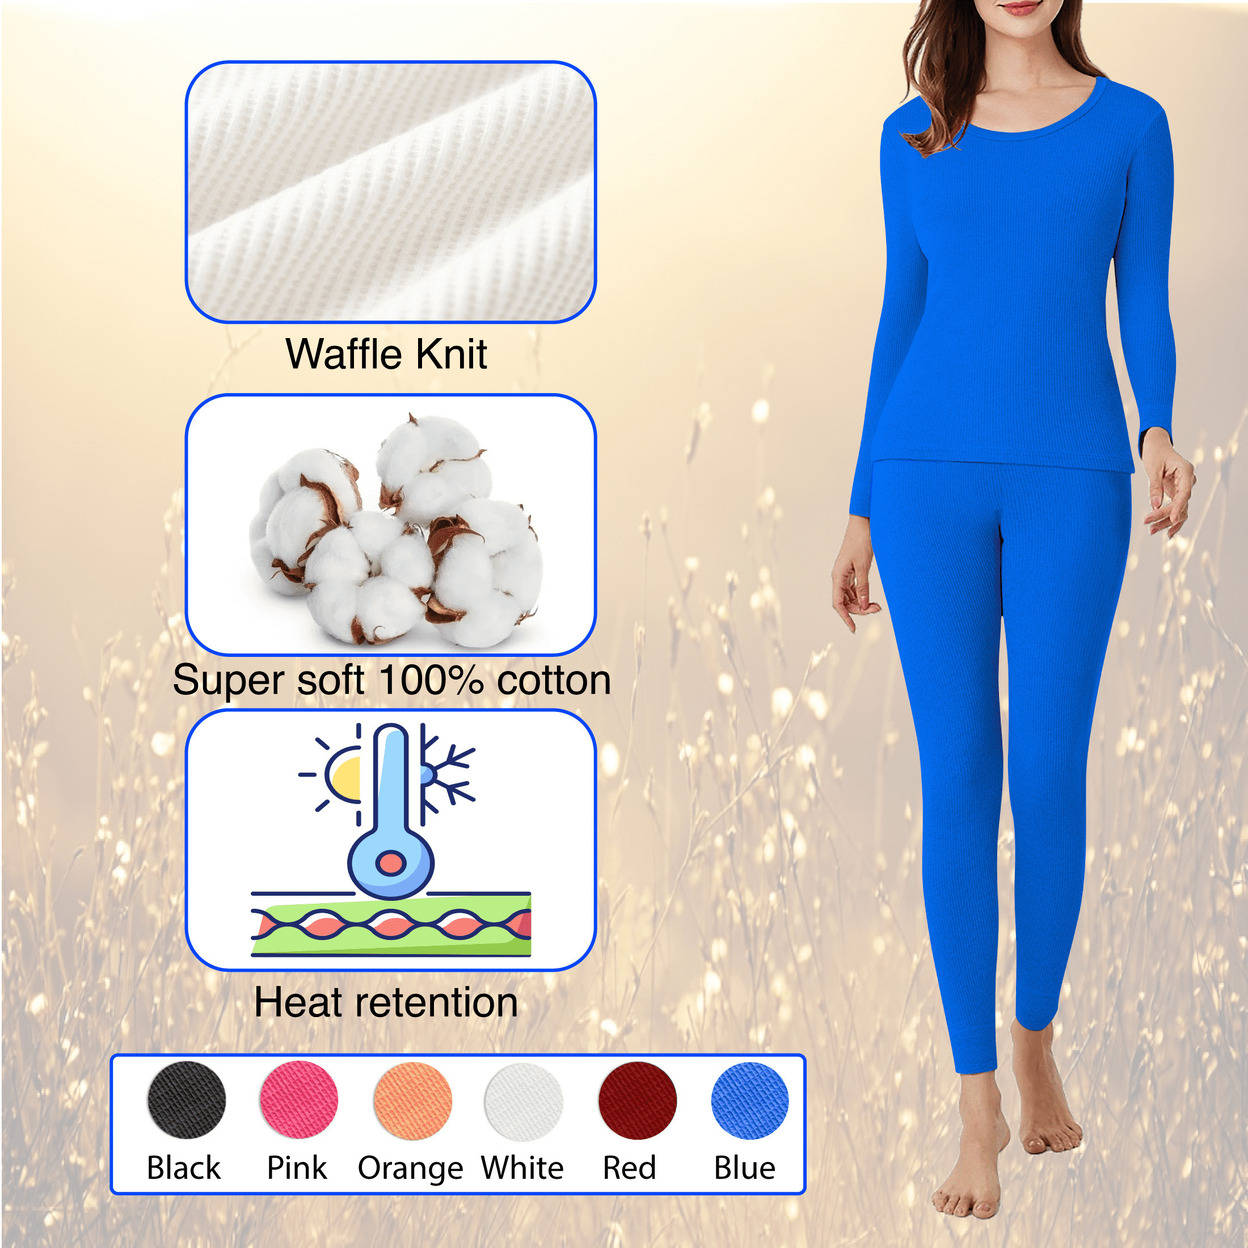 2-Piece: Women's Ultra Soft Cotton Waffle Knit Thermal Sets - Pink, Large